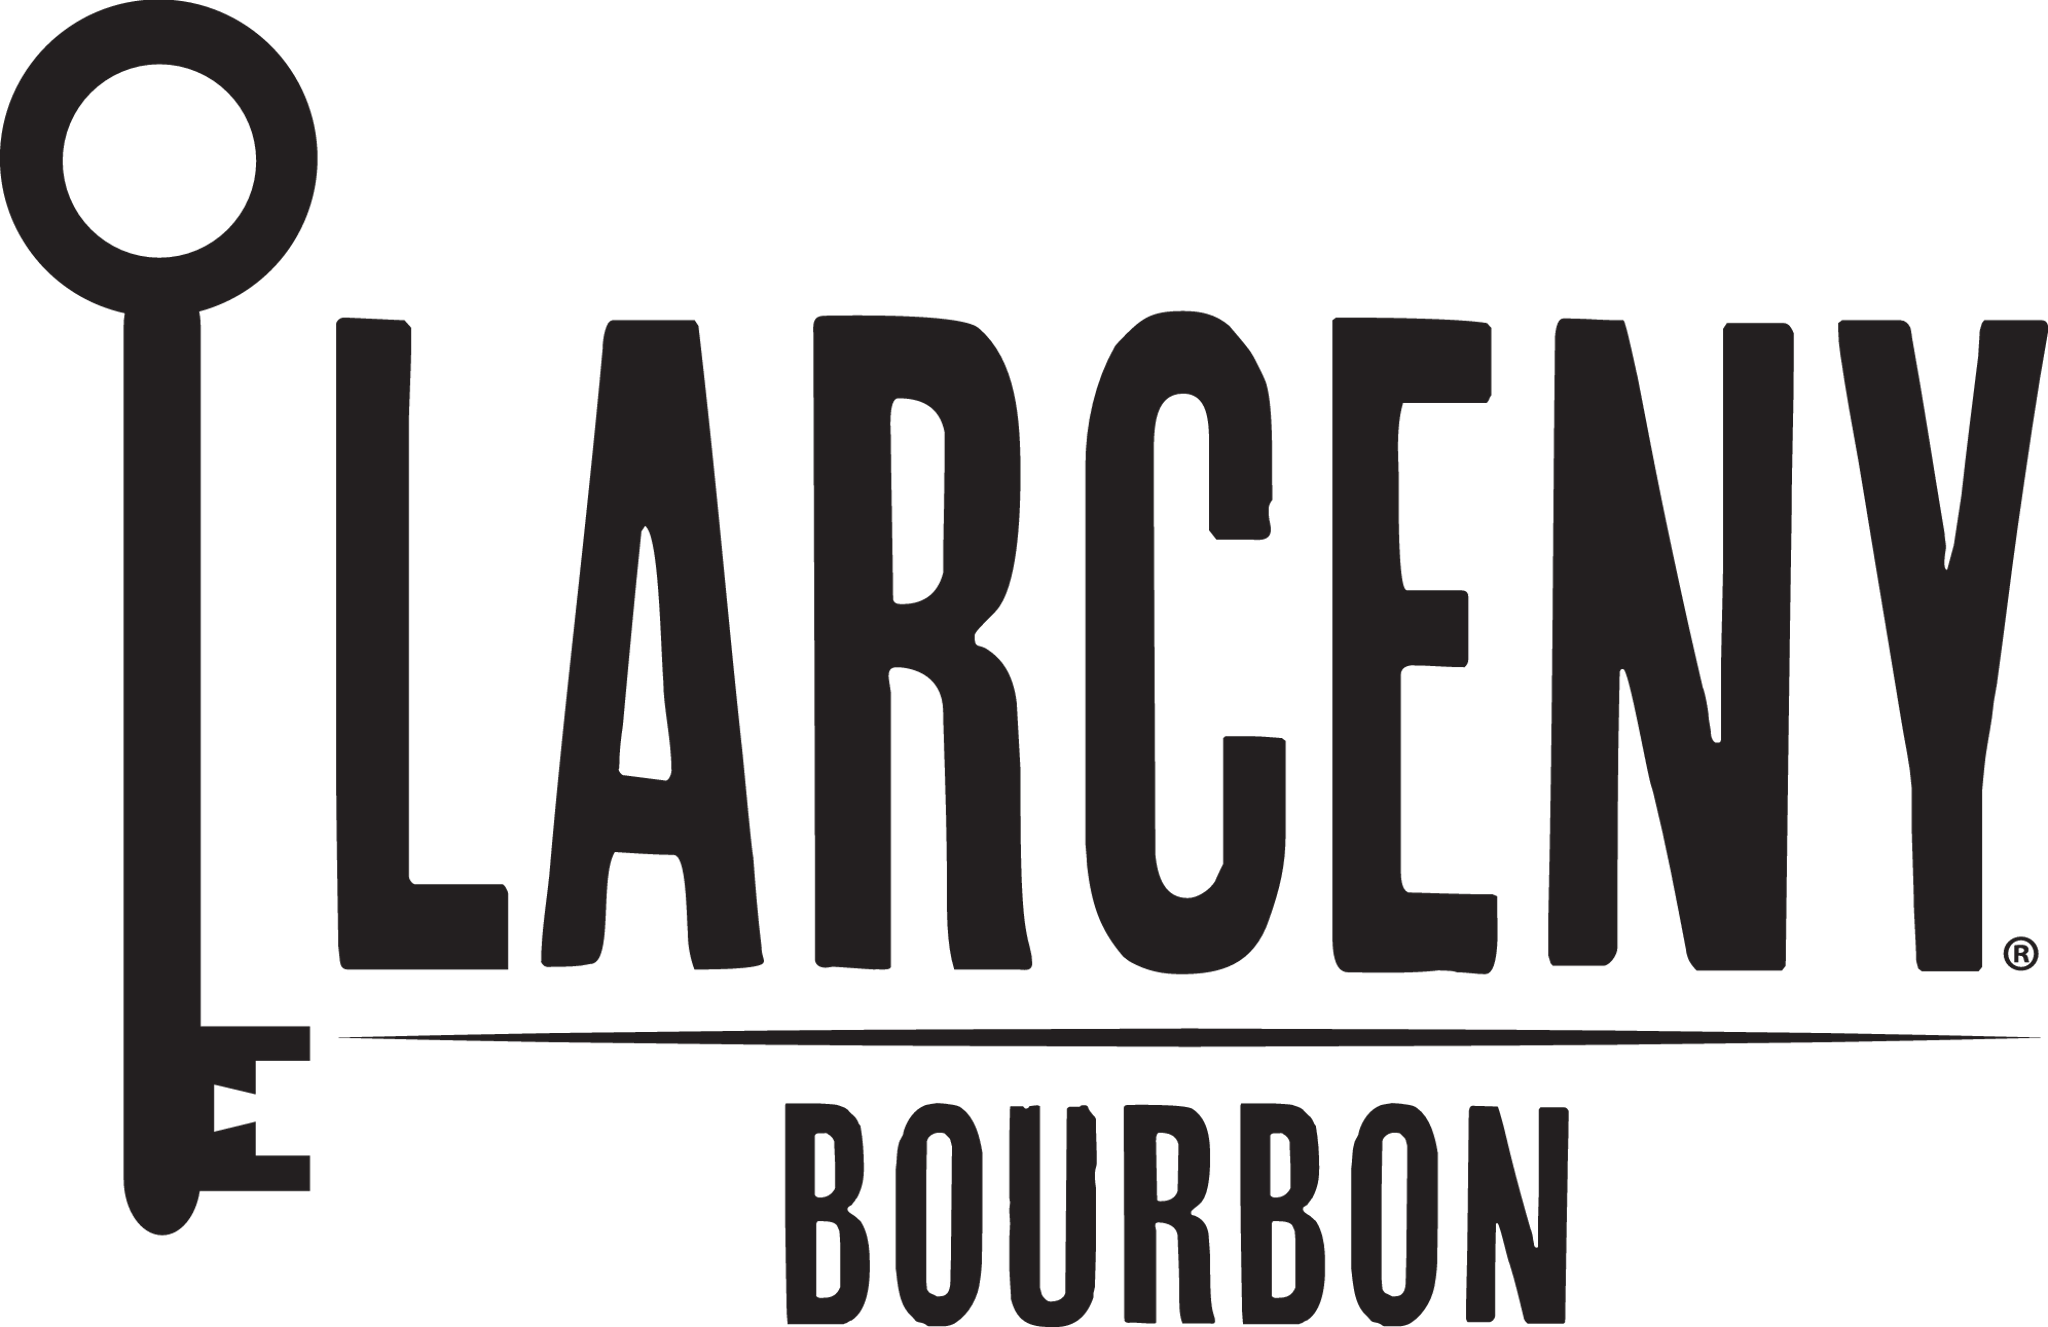 Larcency Logo.png